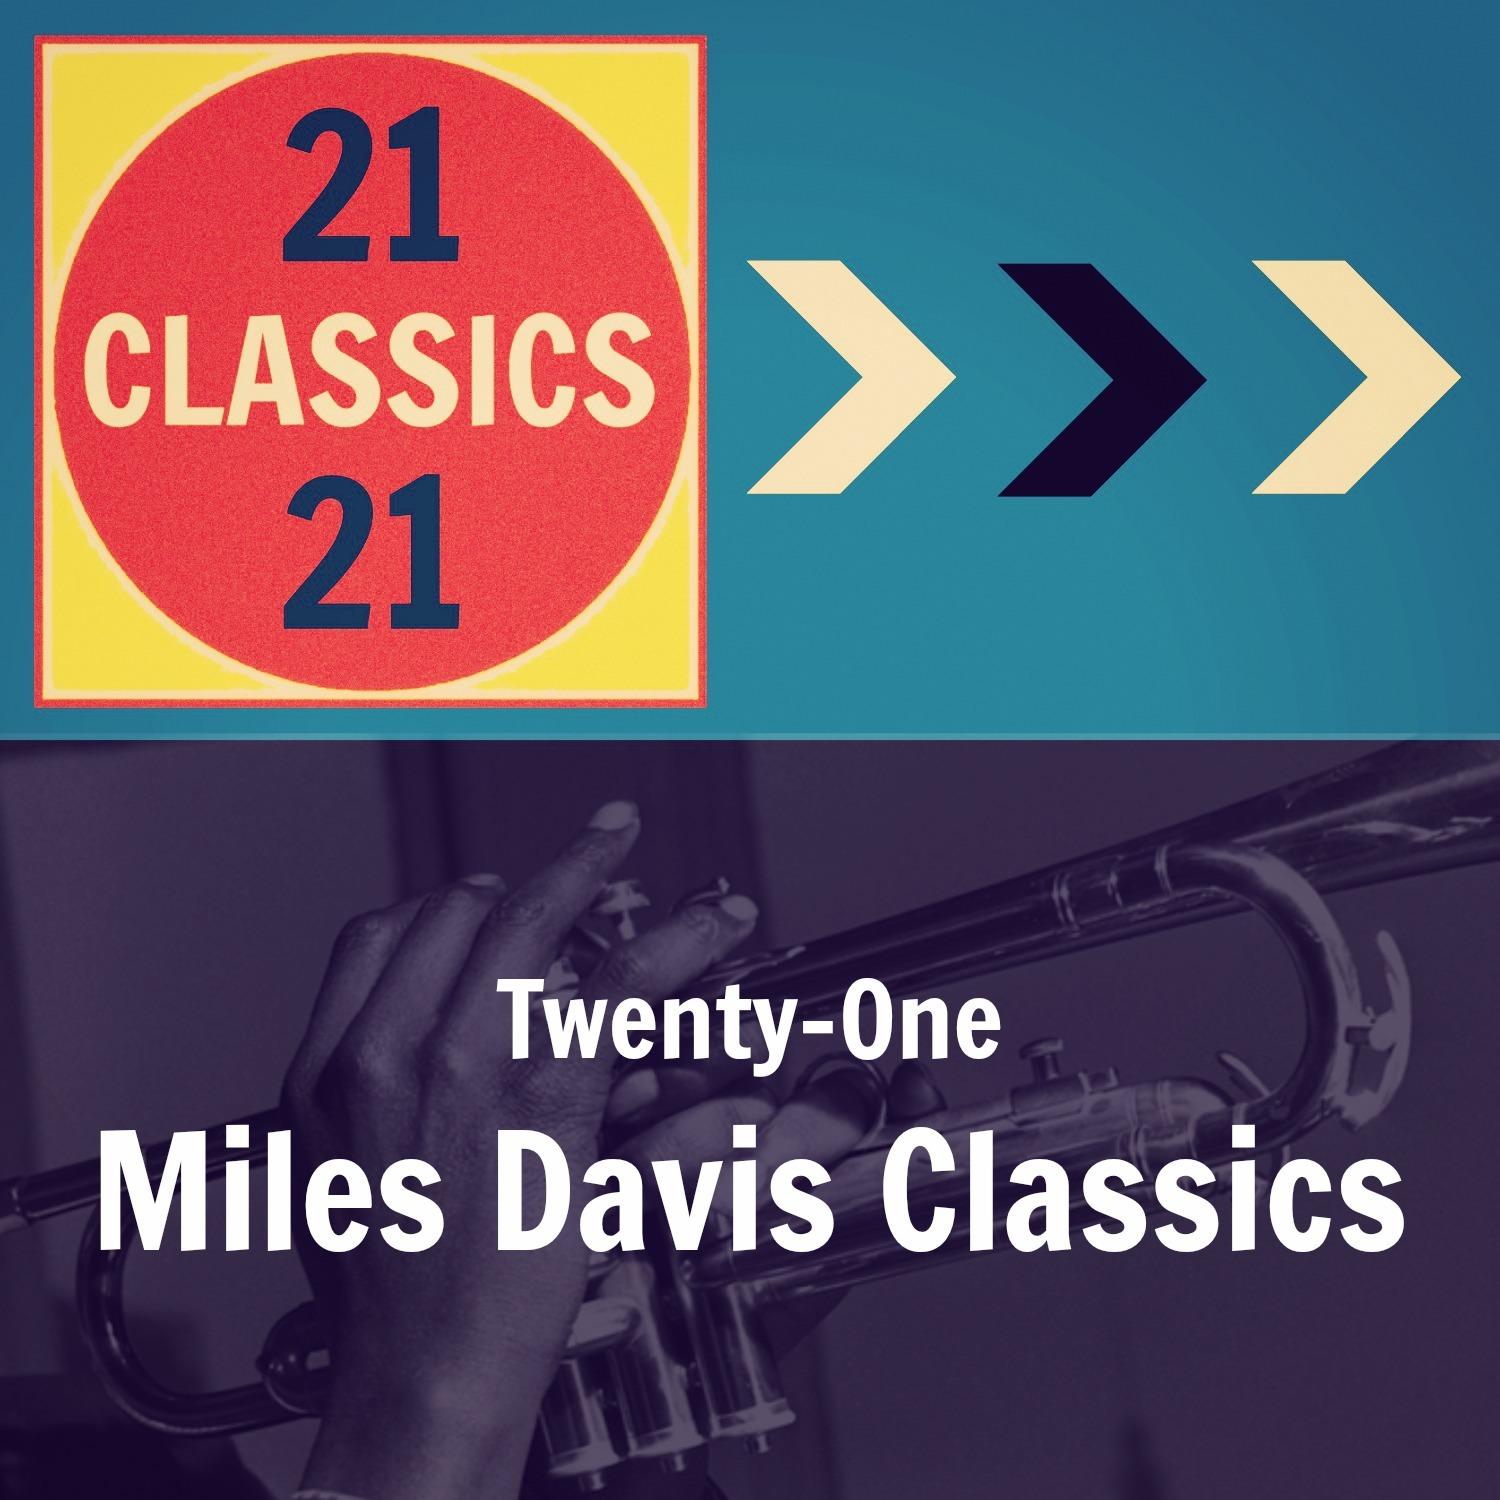 Twenty-One Miles Davis Classics